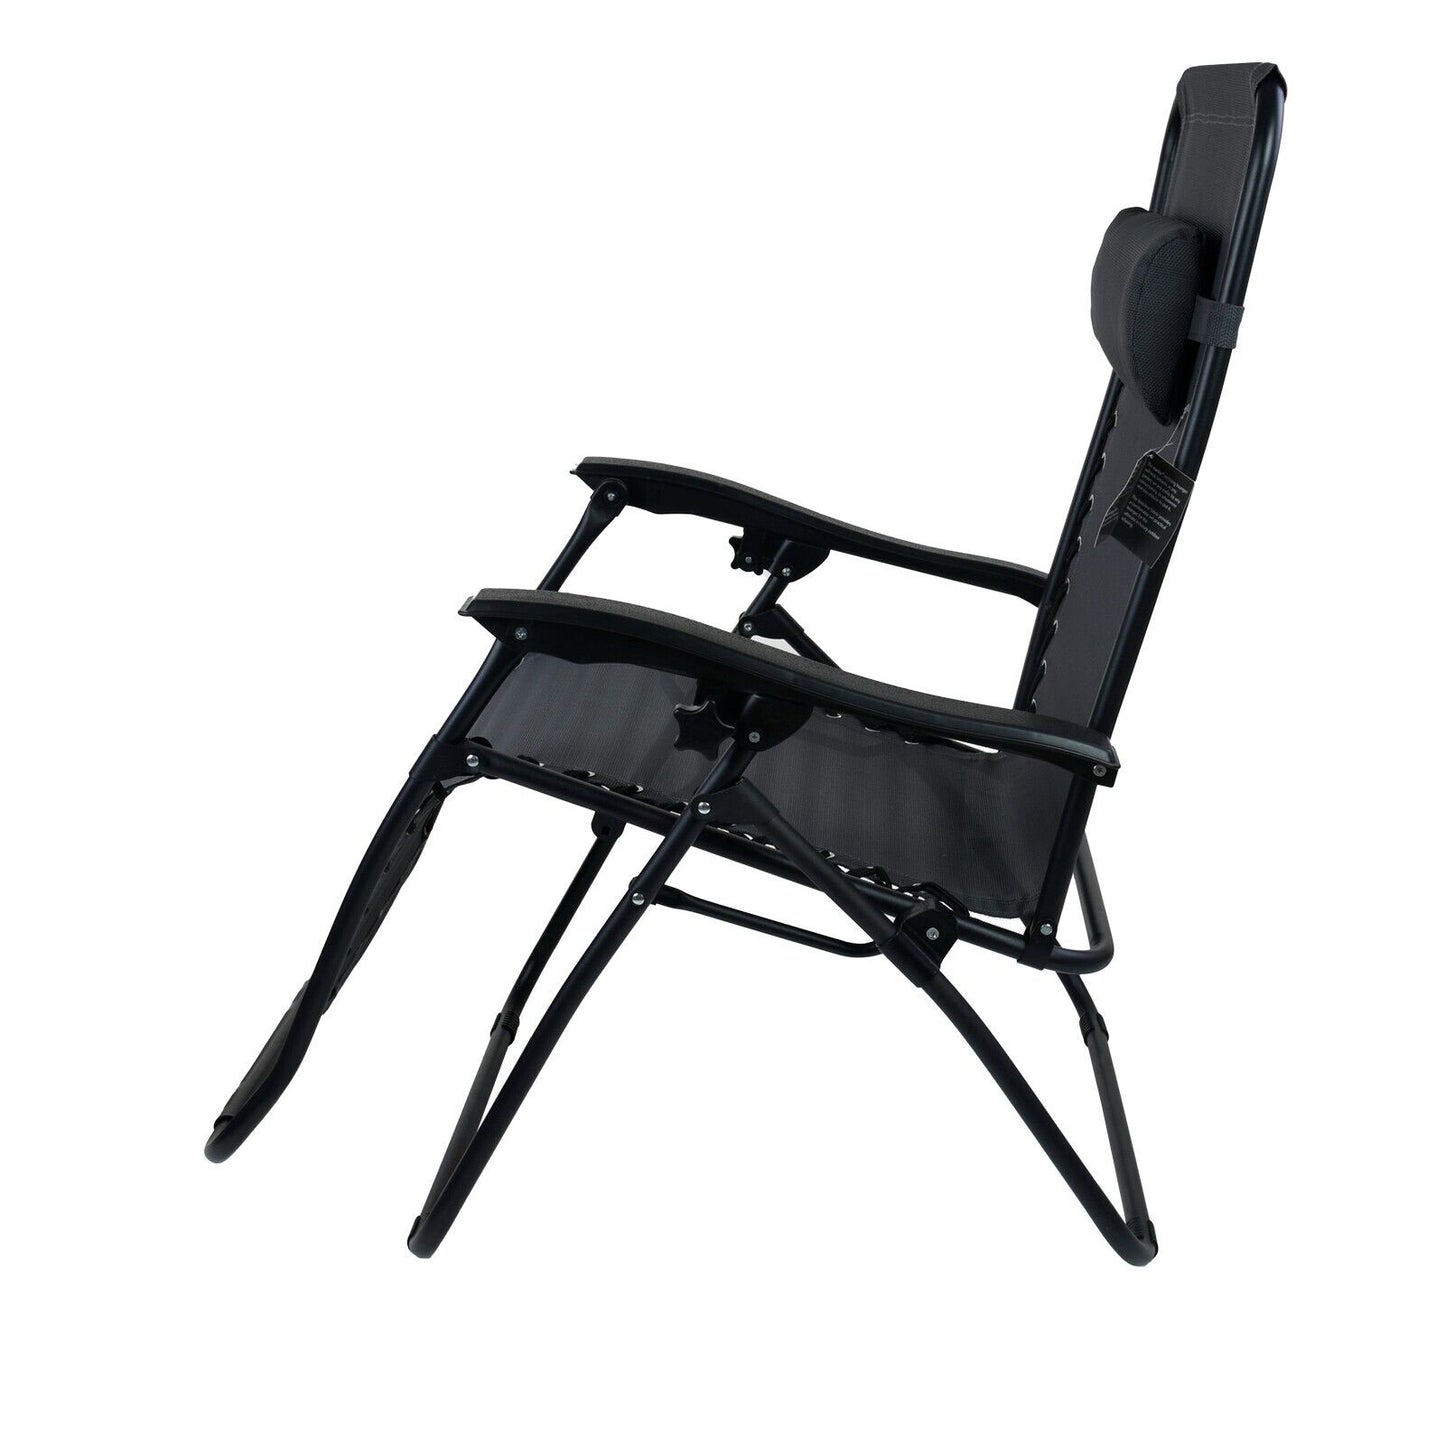 Reclining Lounger Chair - Grey